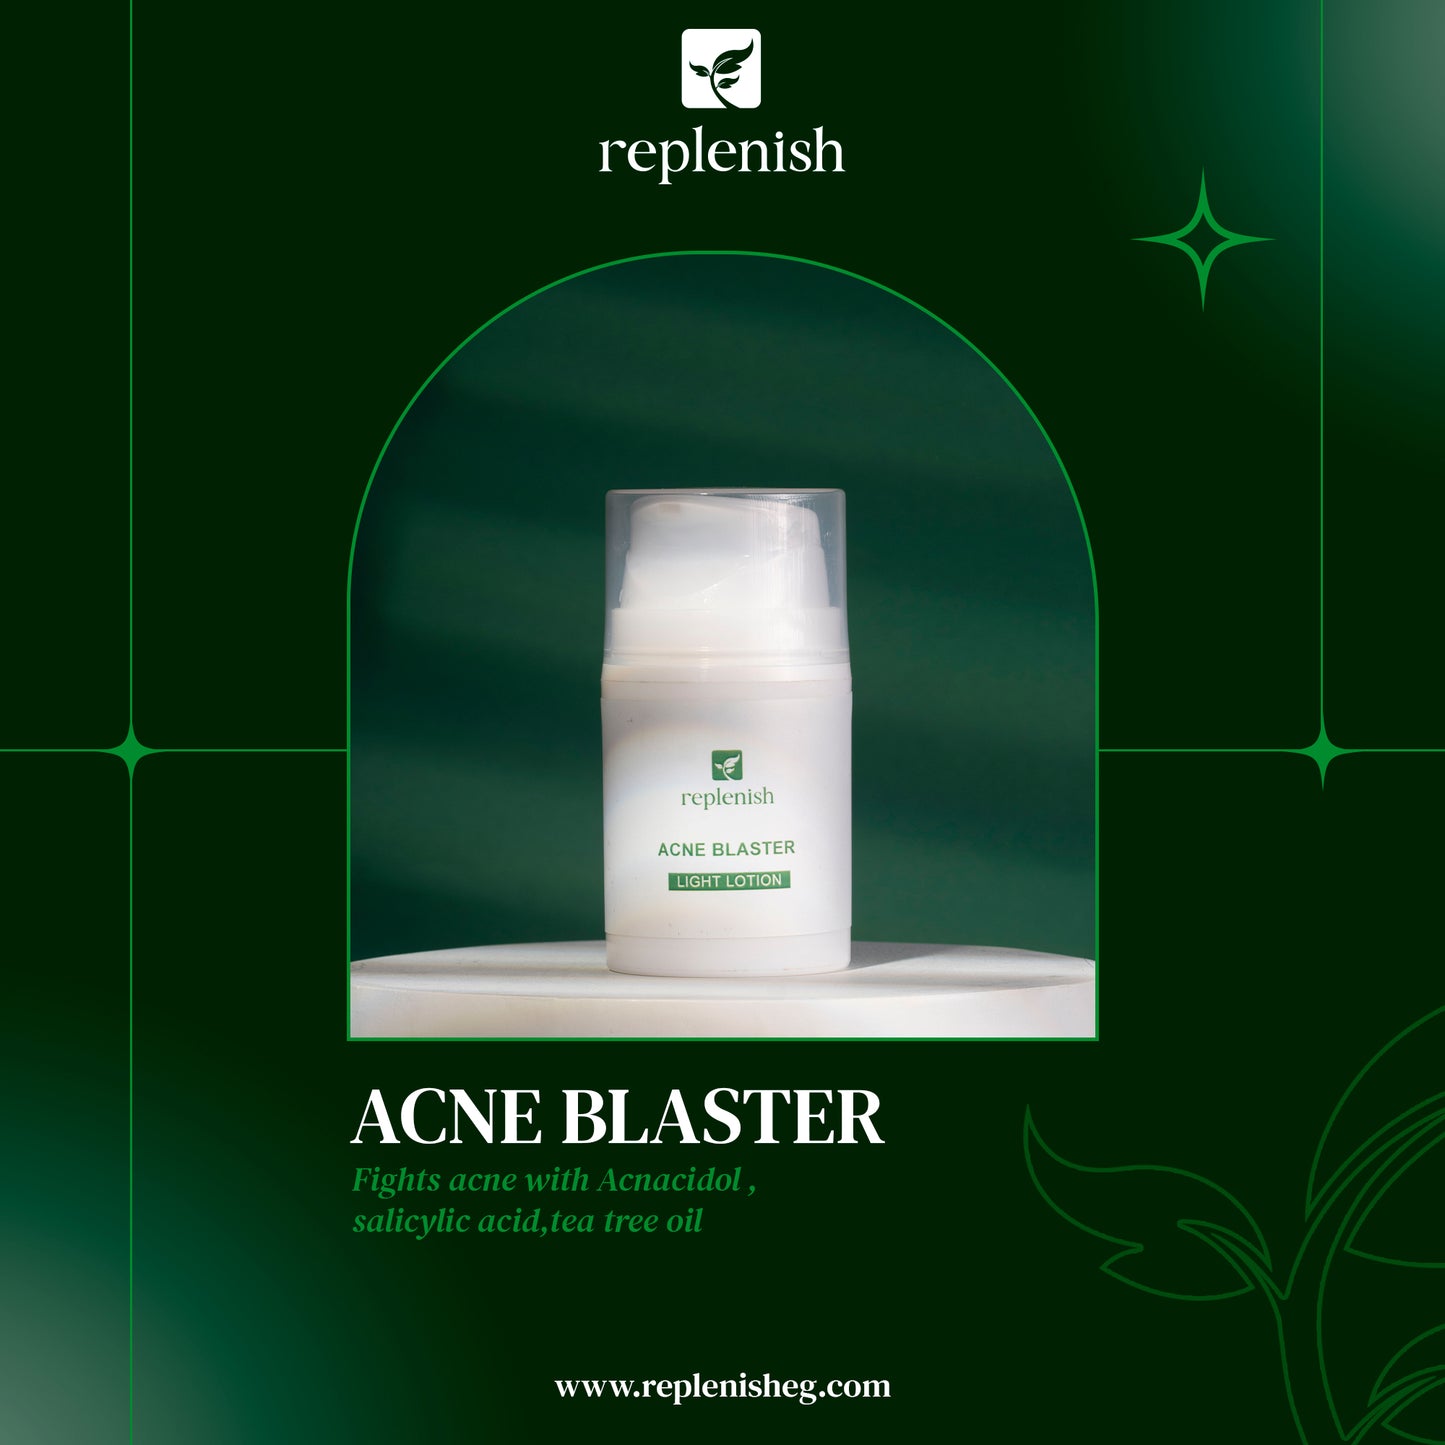 Acne Blaster